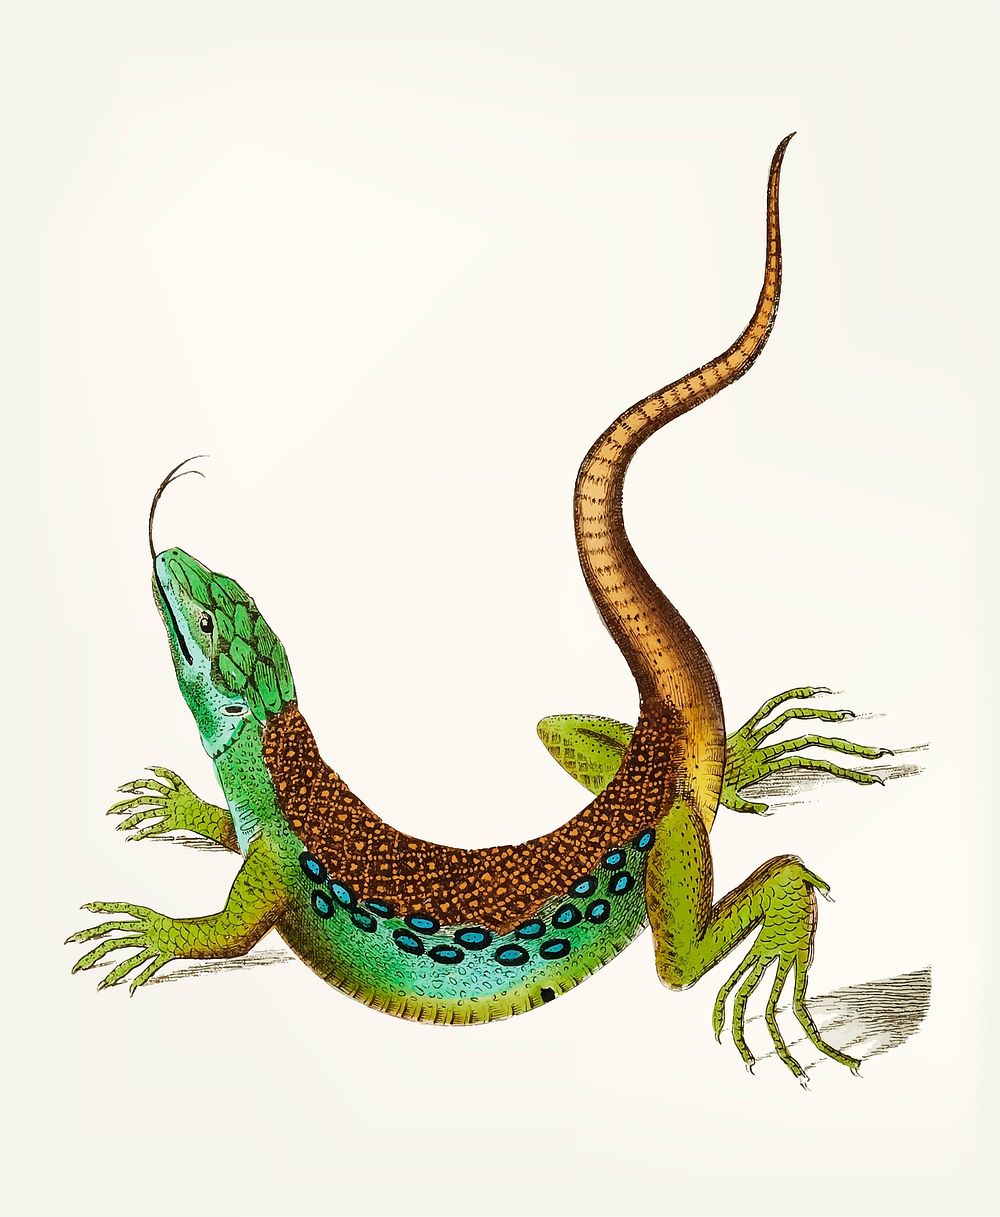 Vintage illustration of great spotted lizard